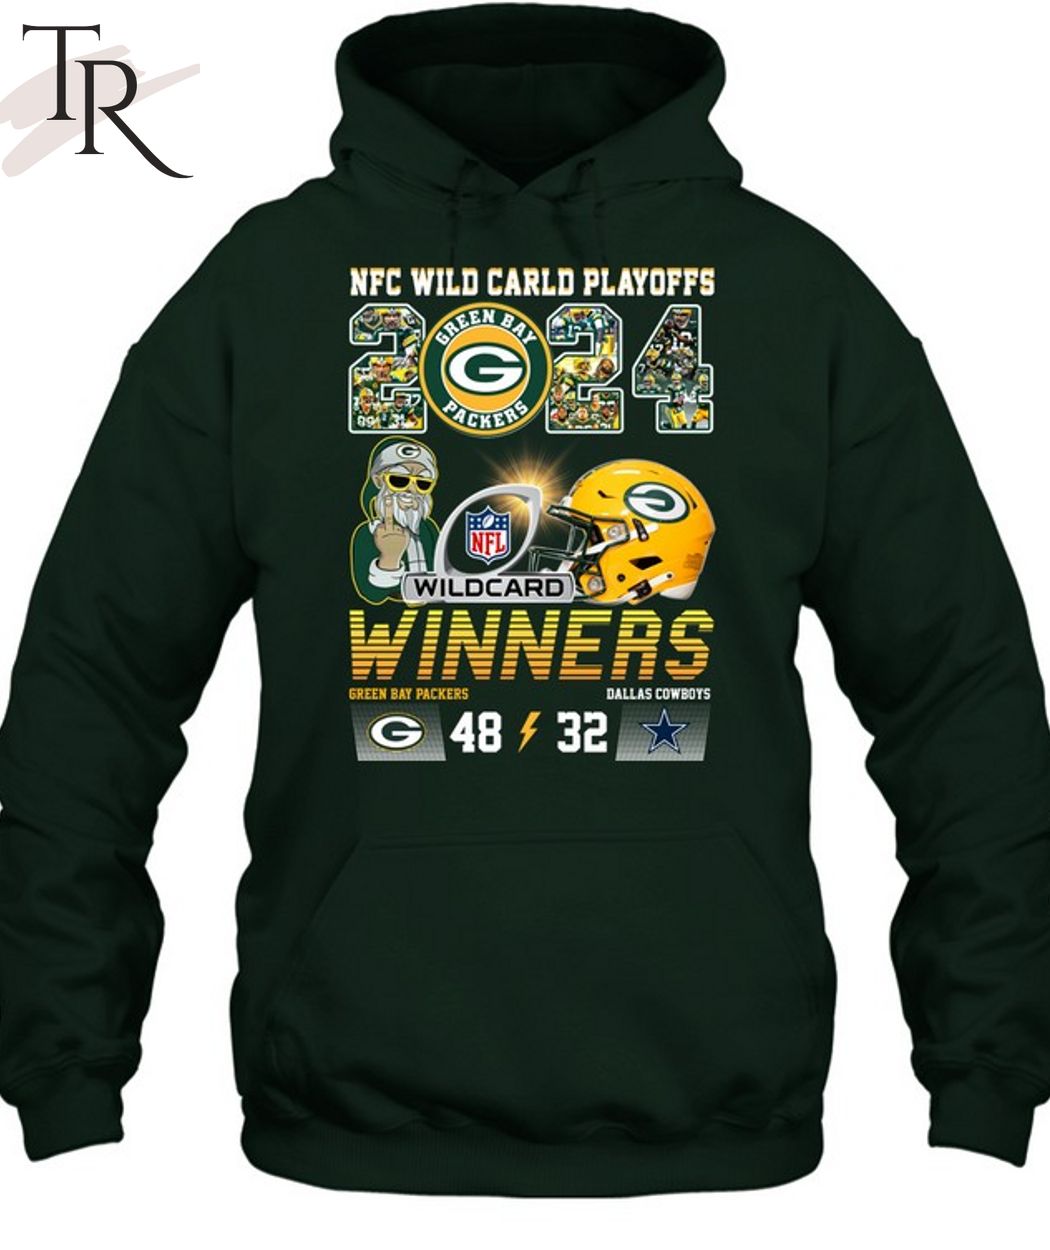 2024 NFC Wild Carld Playoffs Winners Green Bay Packers 48 - 32 Dallas Cowboys T-Shirt